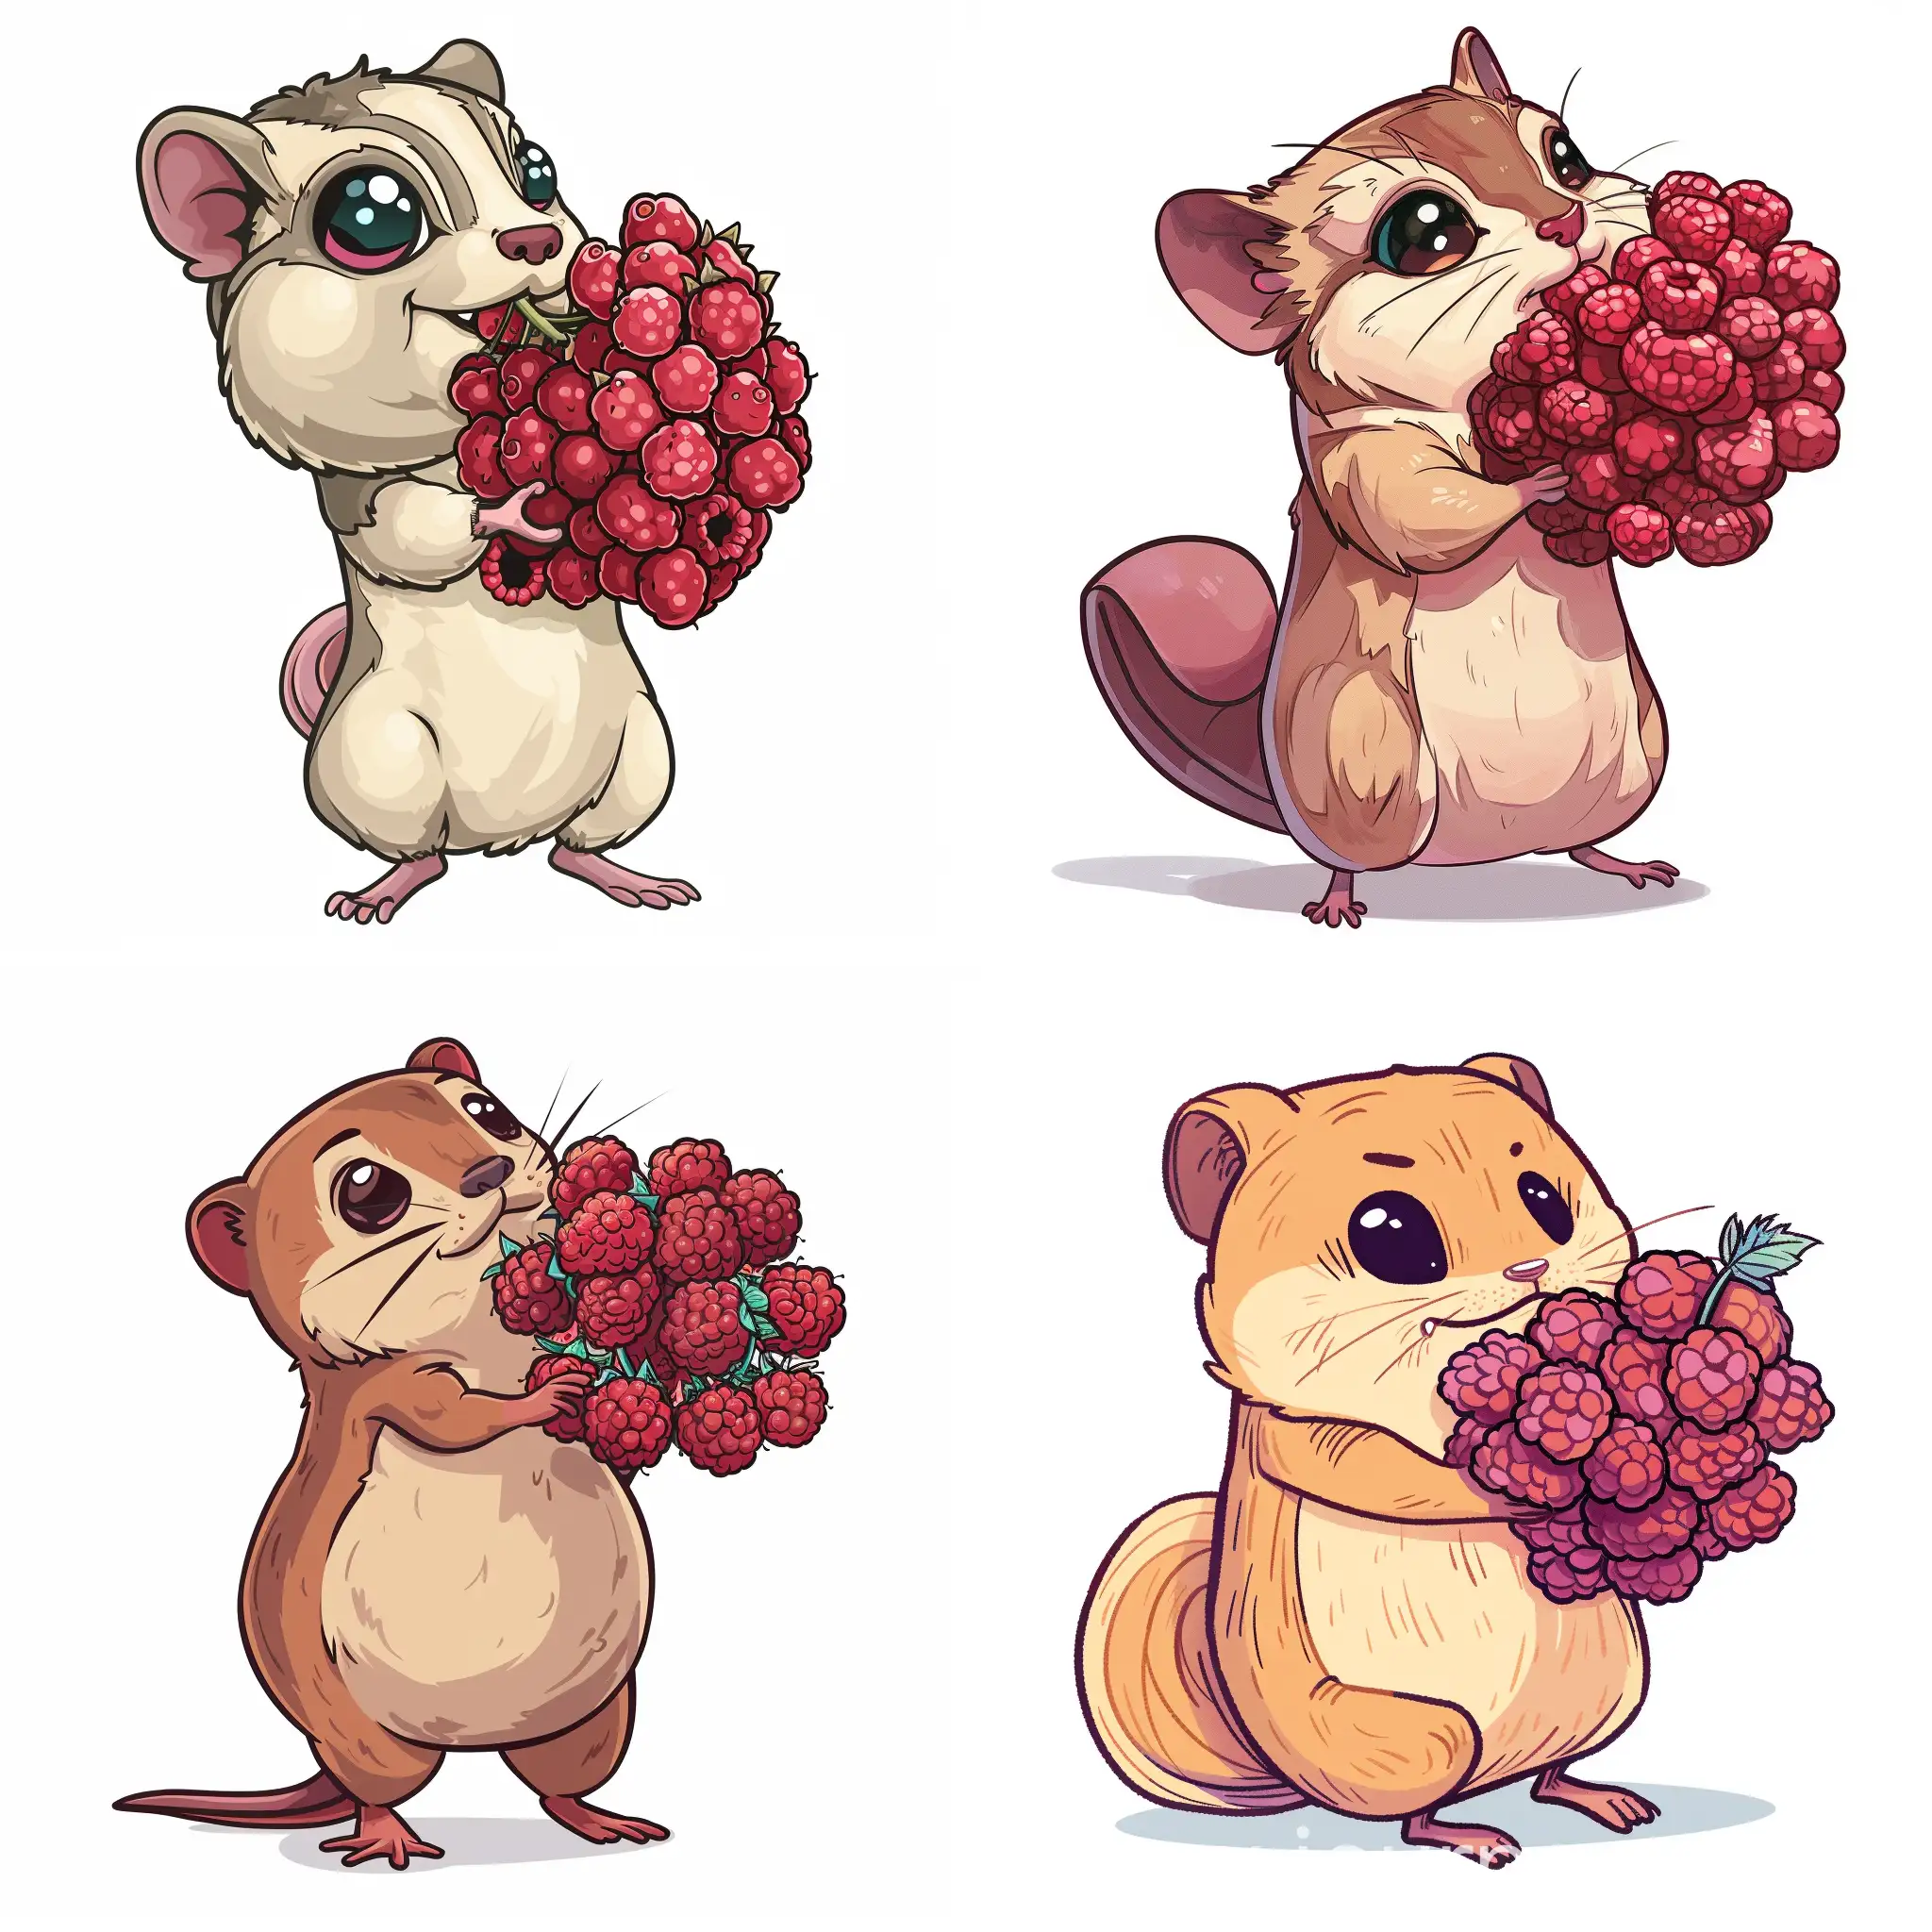 Cute-Cartoon-Shrew-Holding-Giant-Cluster-of-Raspberries